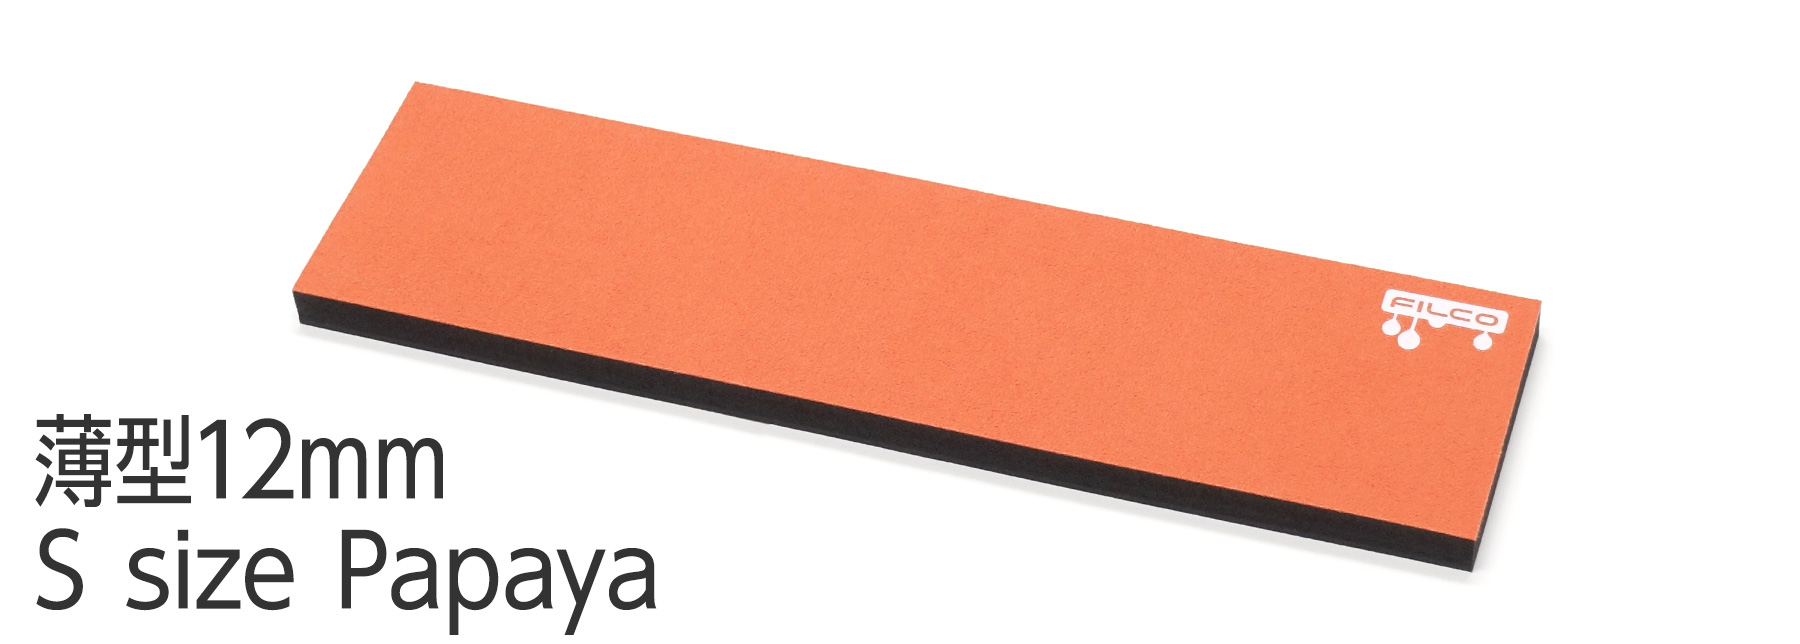 FILCO Majestouch Wrist Rest "Macaron" 薄型12mm・Sサイズ・Papaya